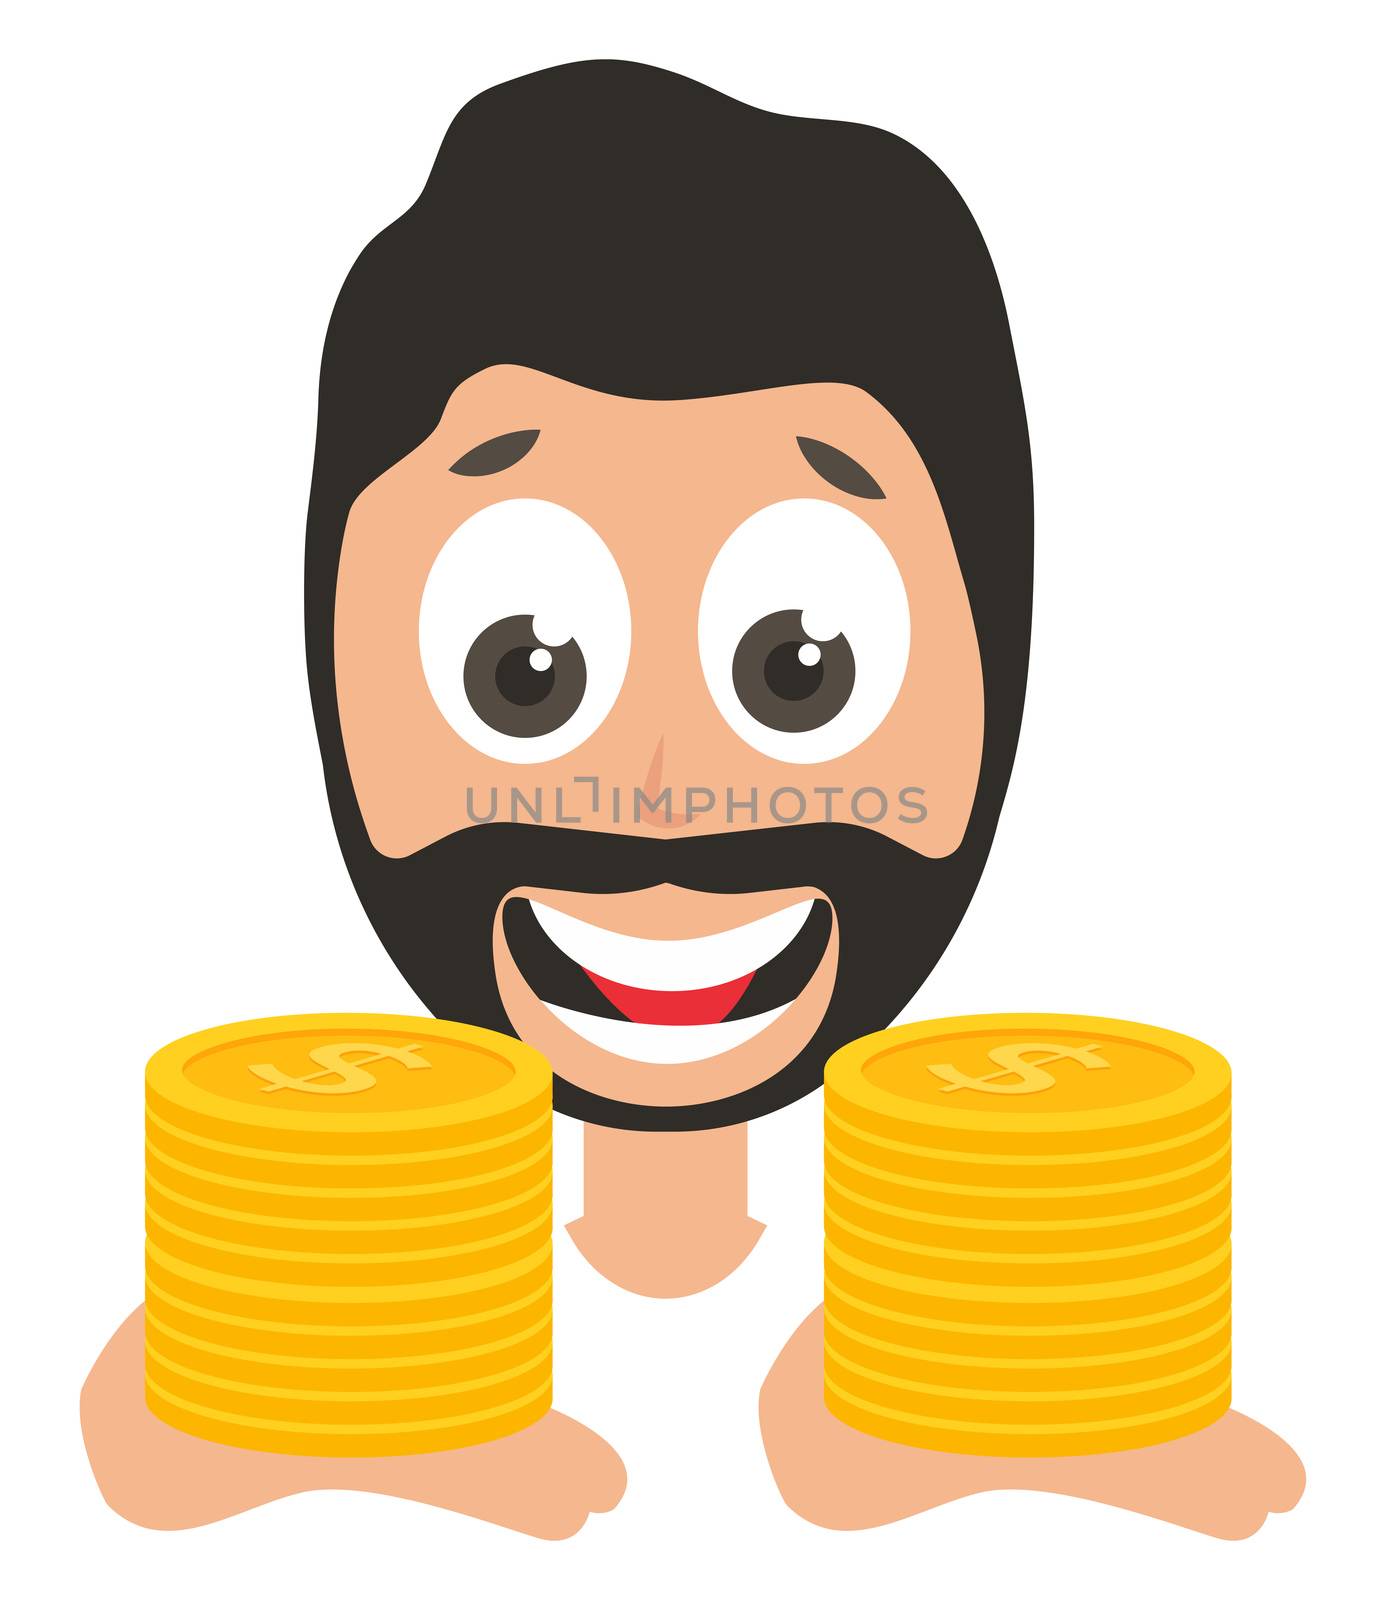 Man holding coins, illustration, vector on white background